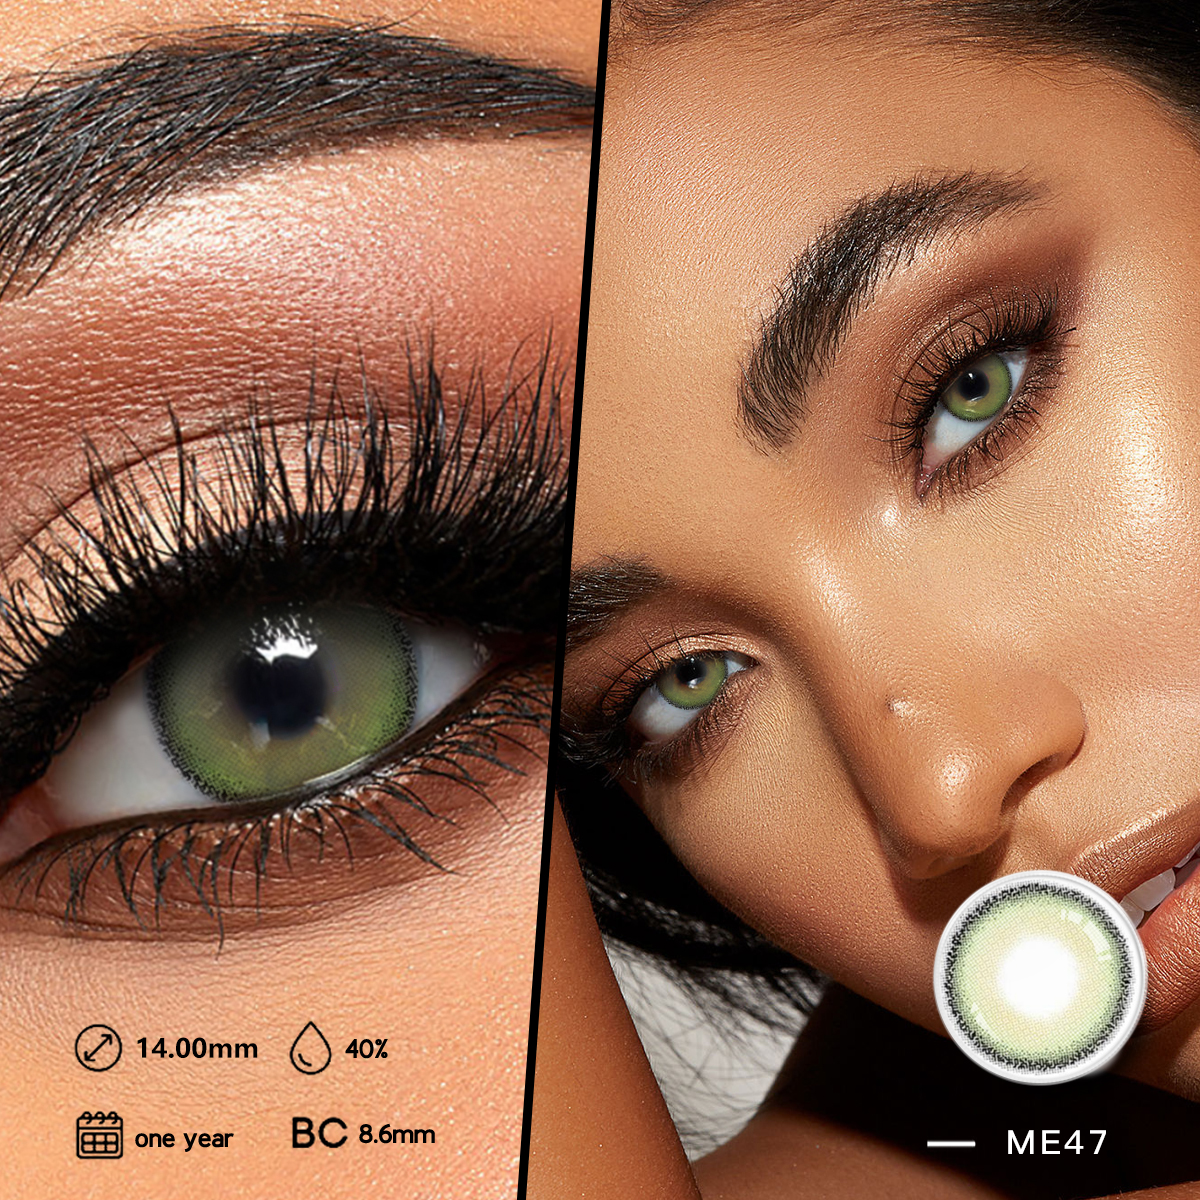 CE ISO fektheri ka ho toba wholesale theko e tlaase super natural yellow colored contacts cosmetic color contact lenses